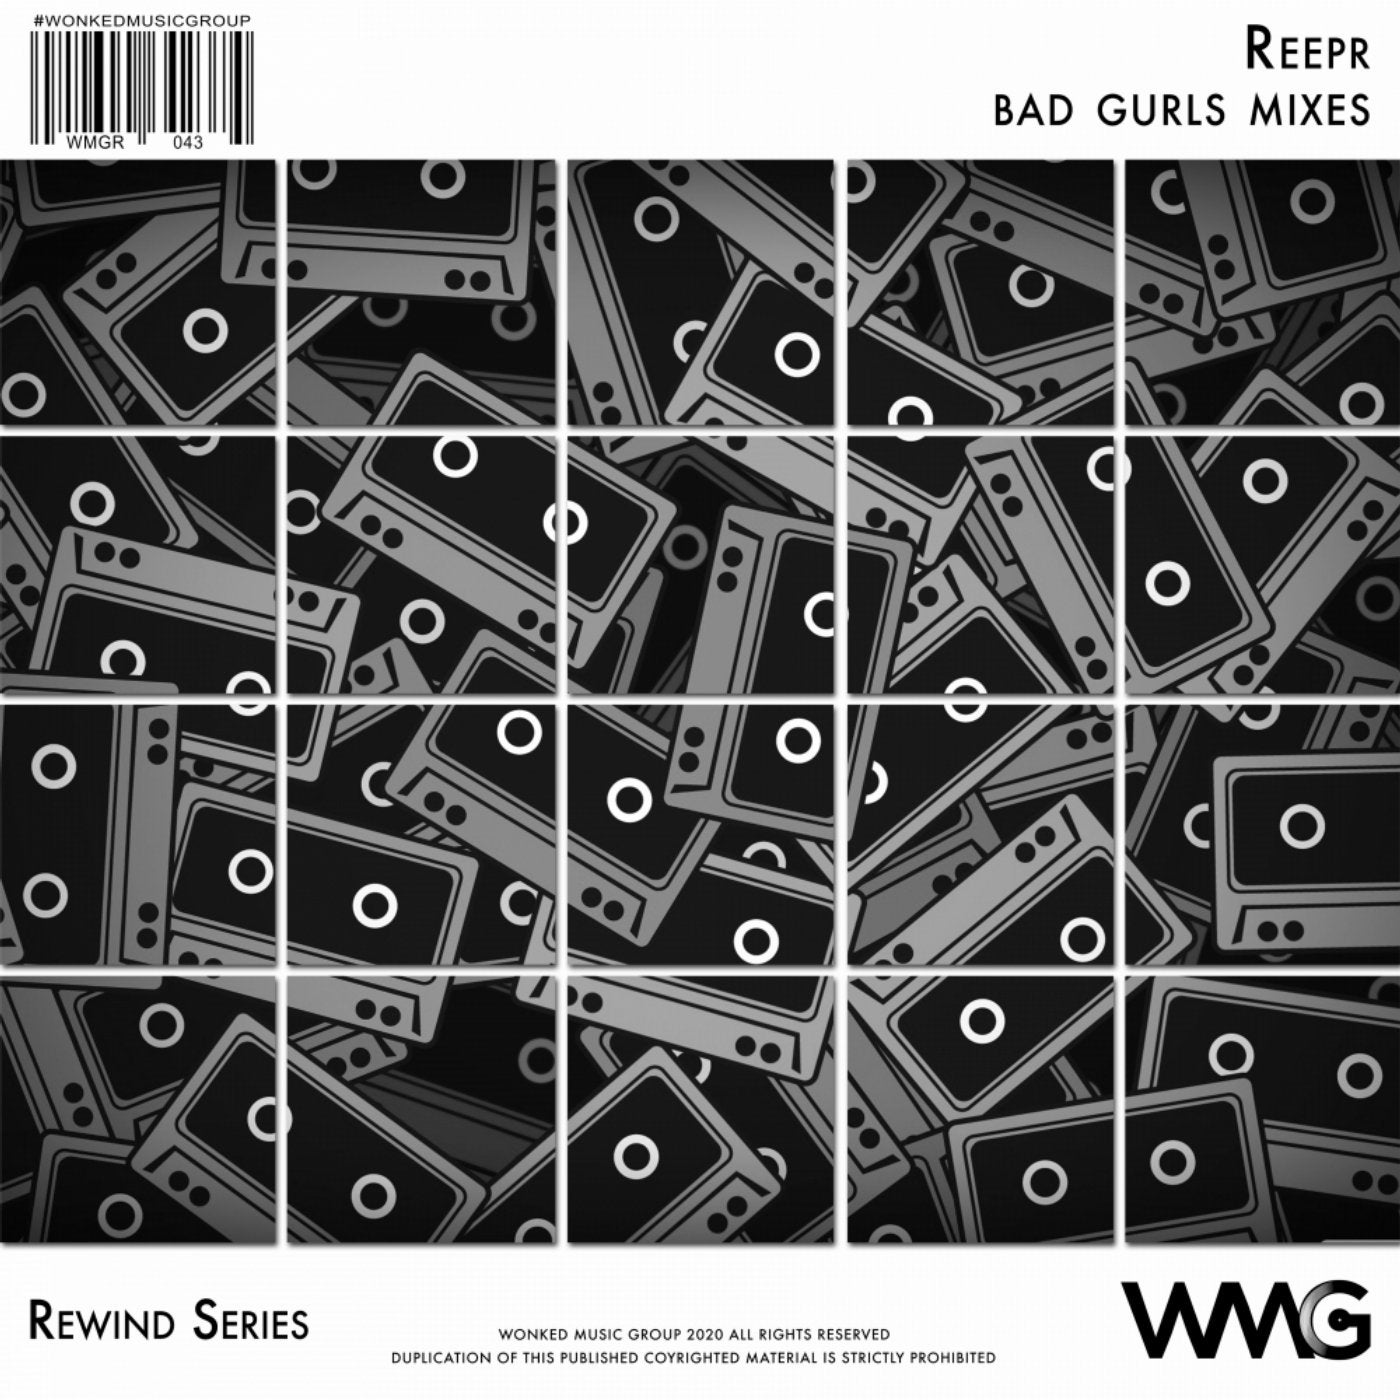 Rewind Series: ReepR - Bad Gurls Mixes